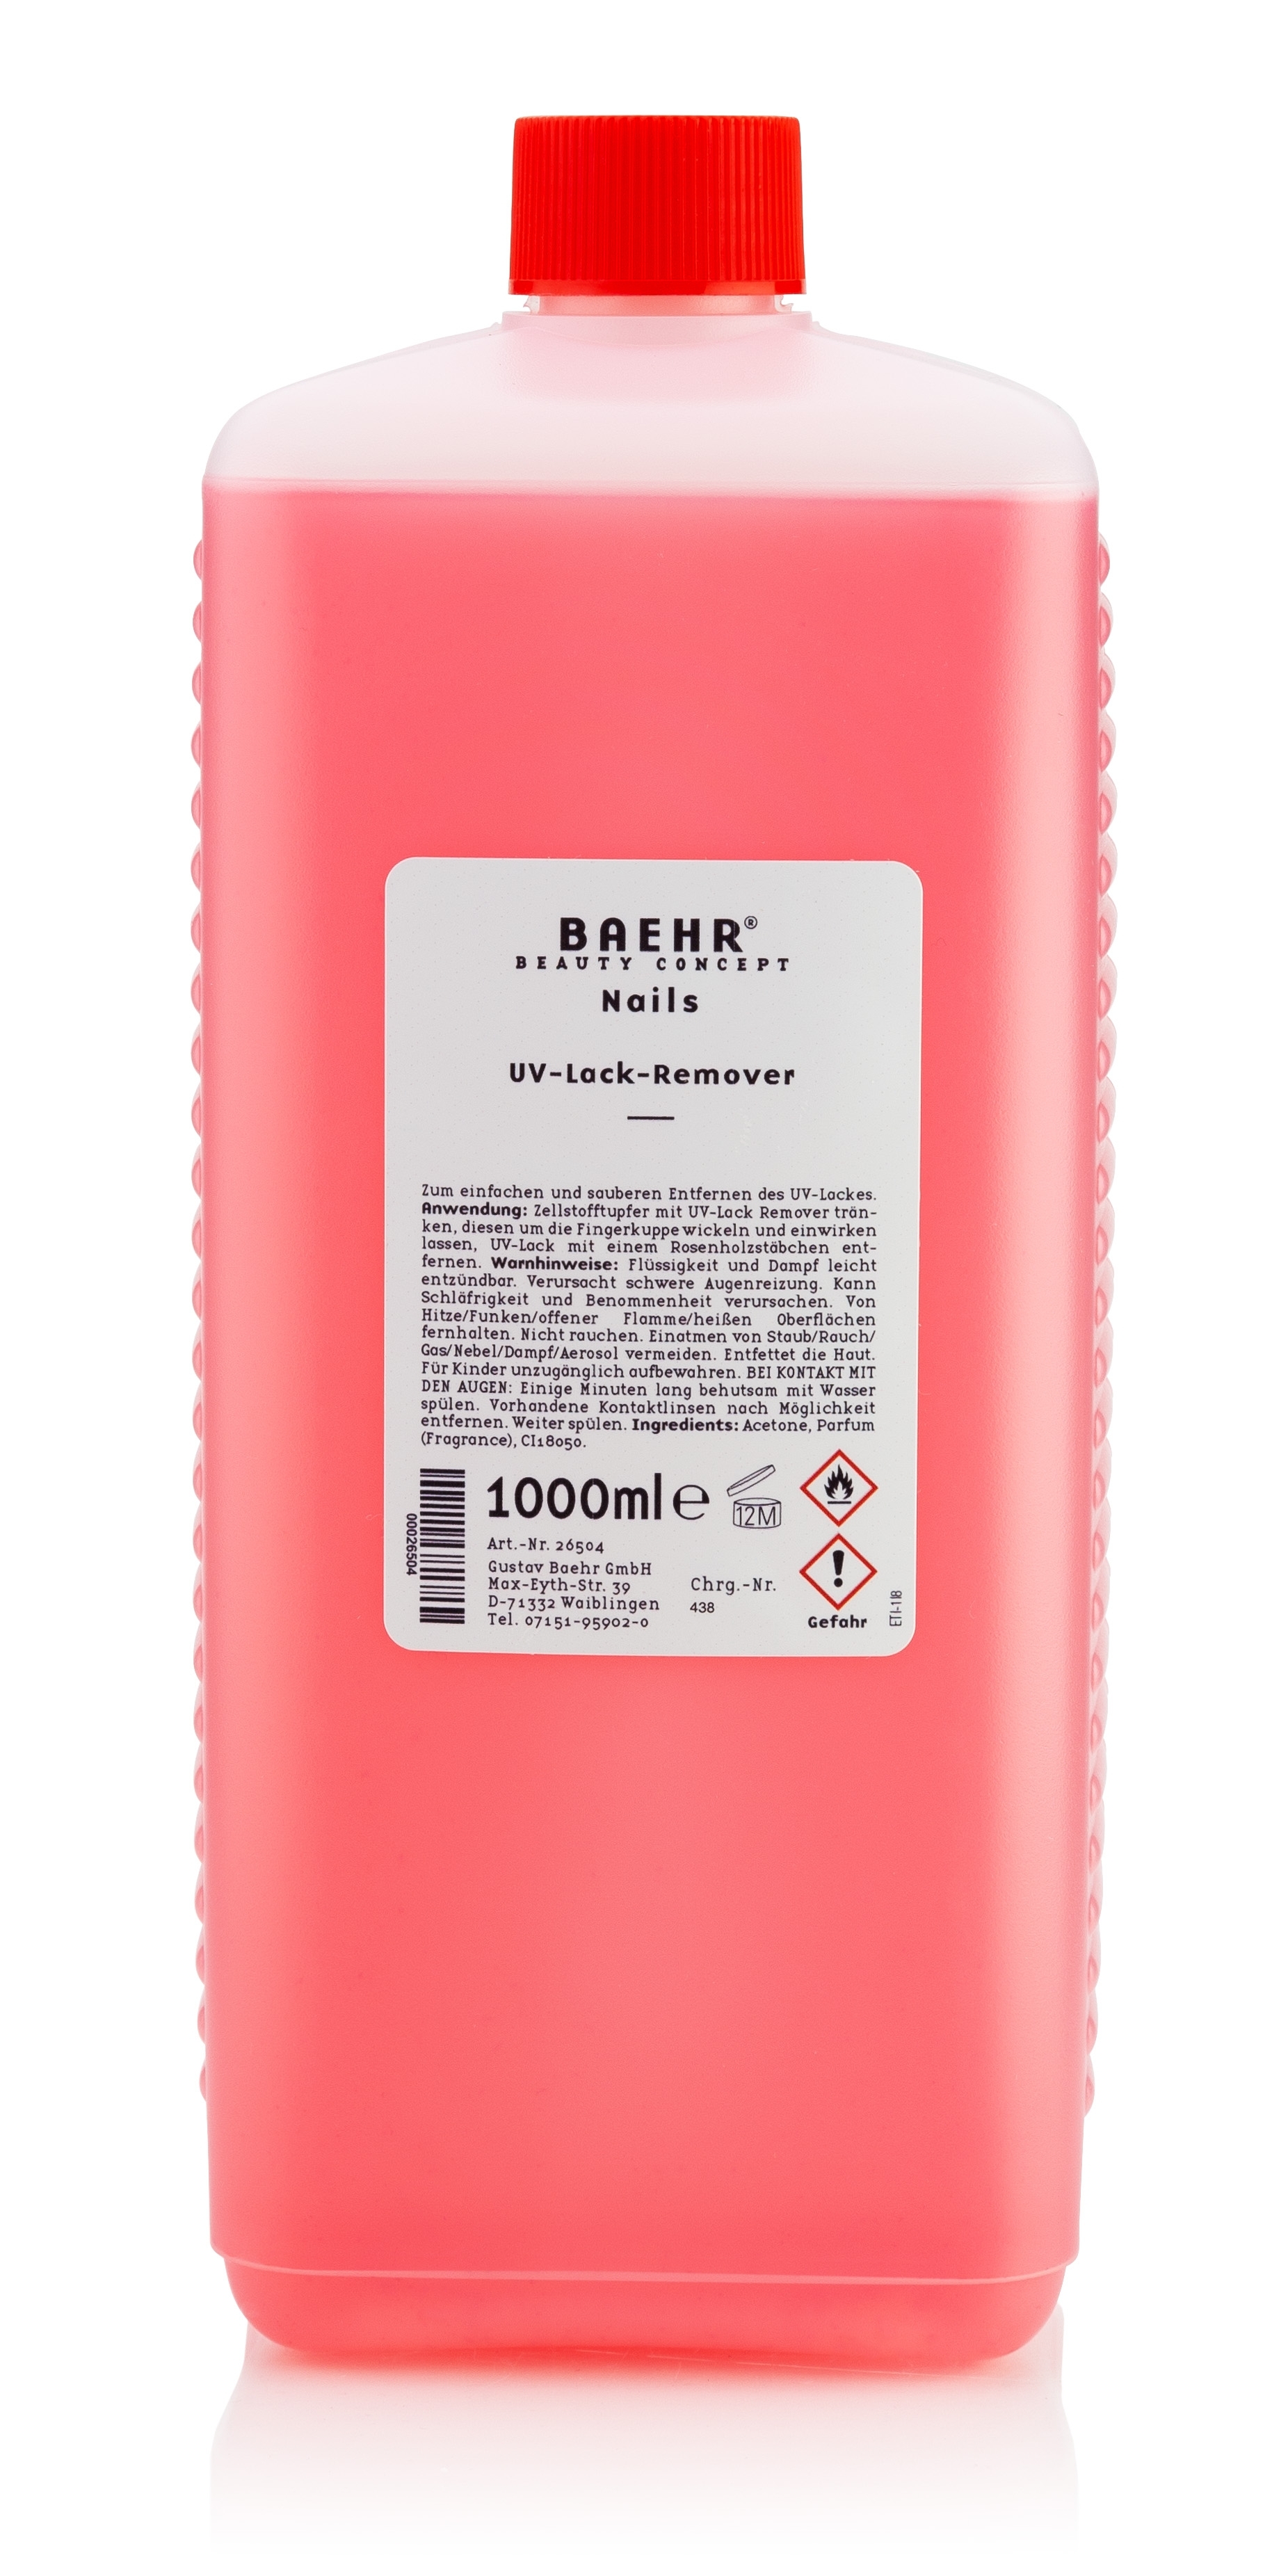 BAEHR BEAUTY CONCEPT - NAILS UV-Lack-Remover 1000 ml